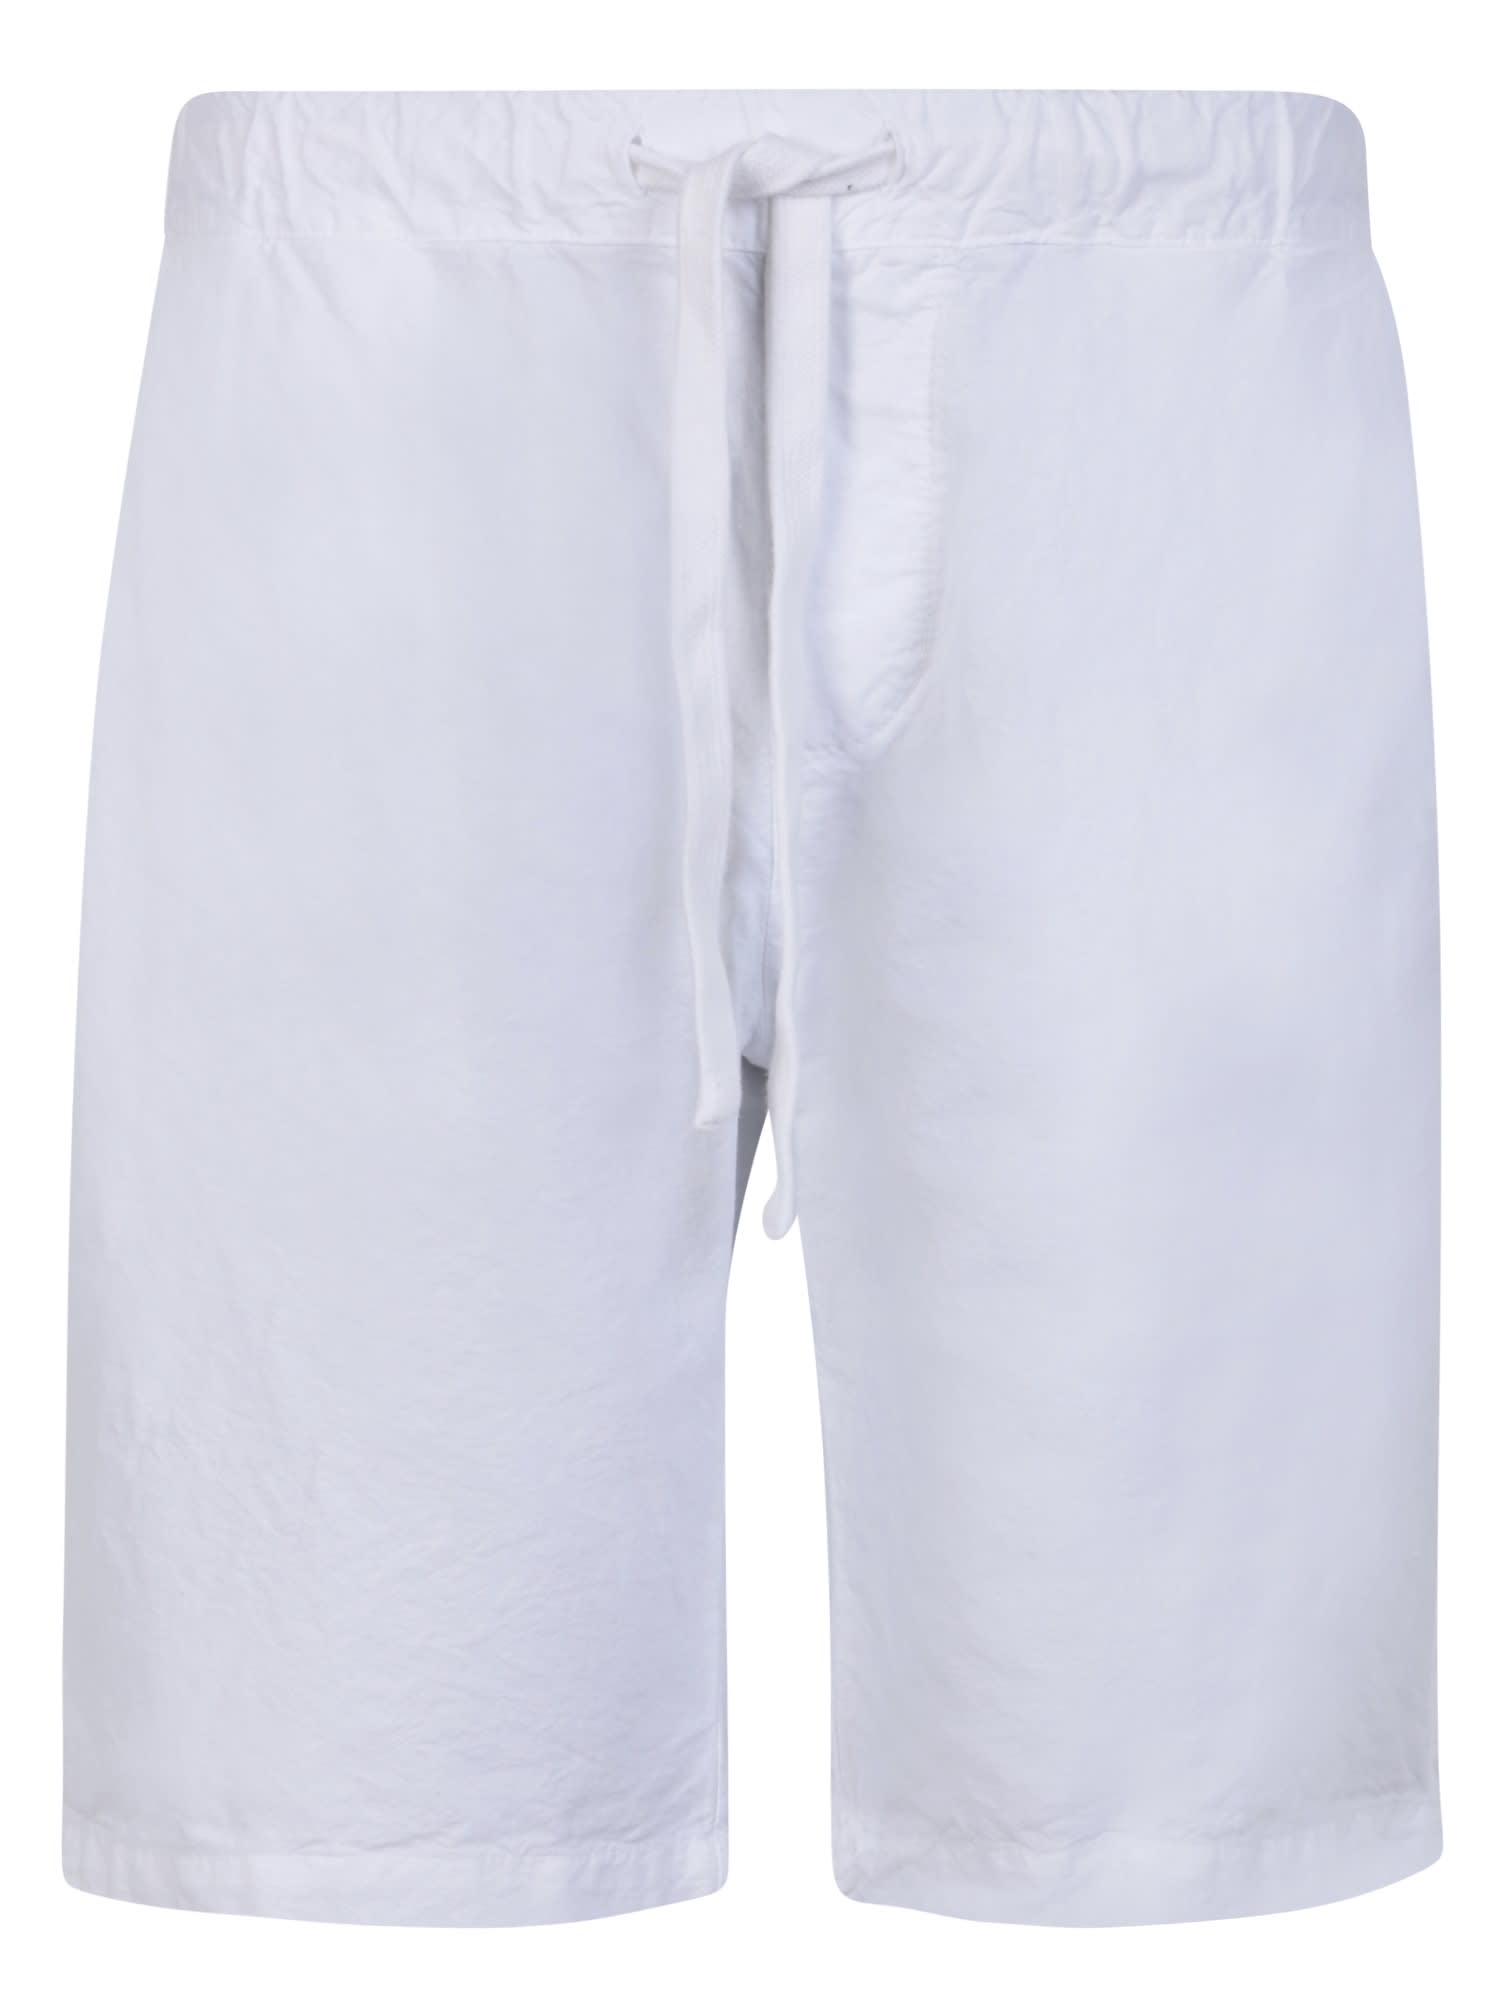 Original Vintage Style White Cotton Bermuda Shorts